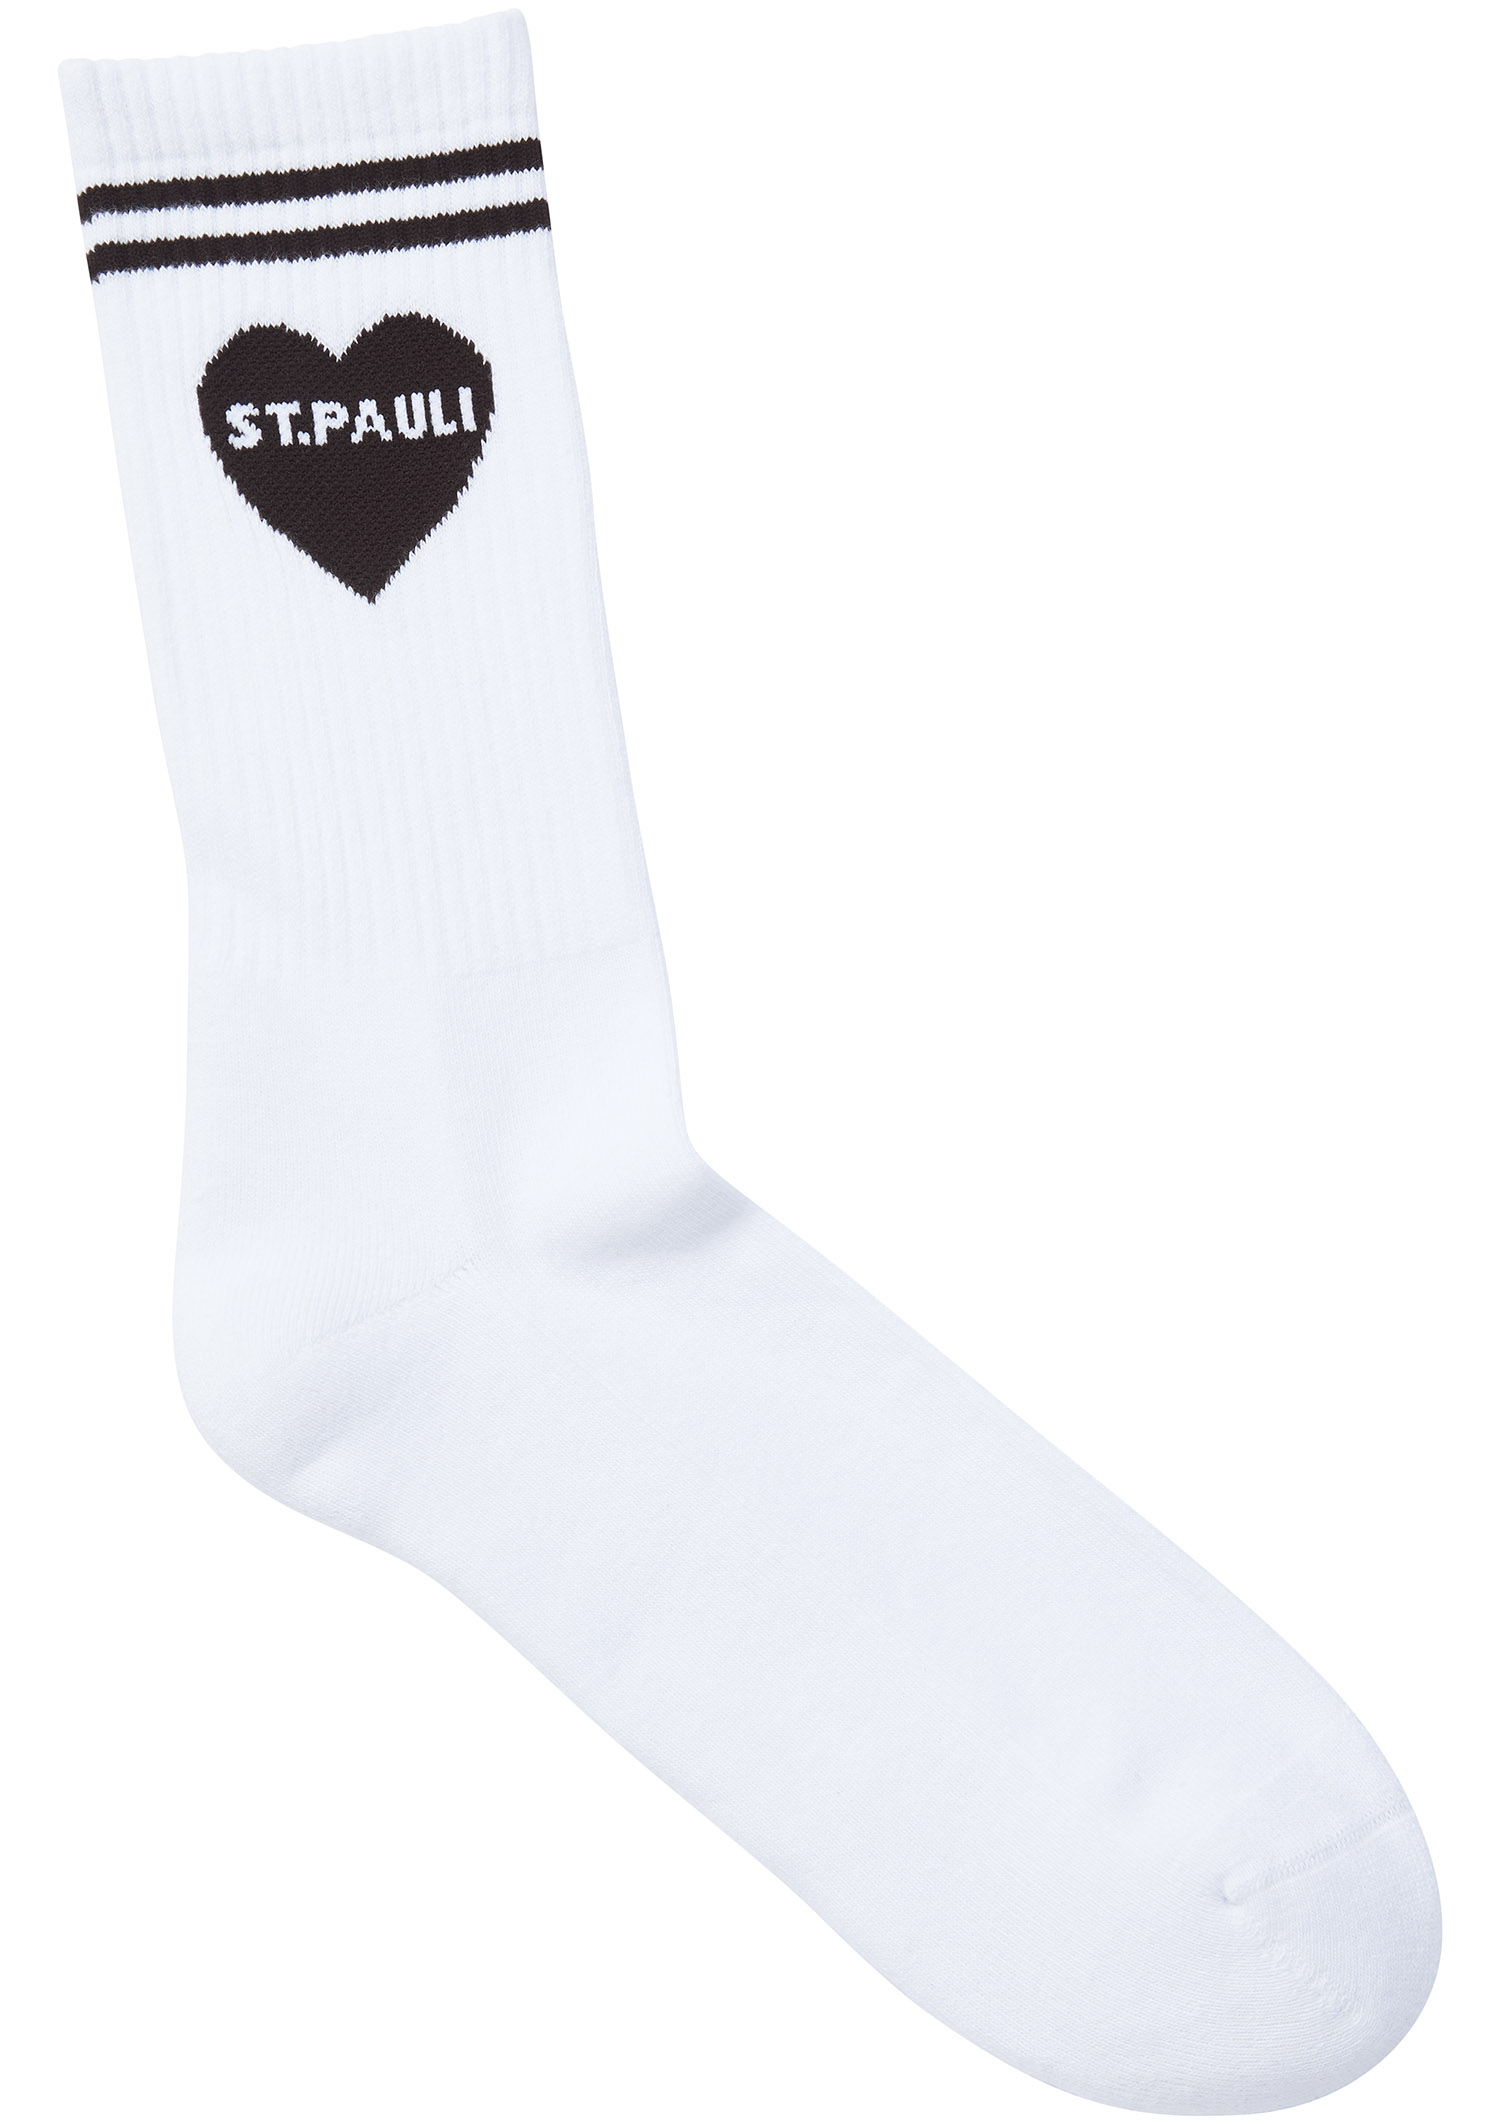 Socks "St. Pauli Heart" - black